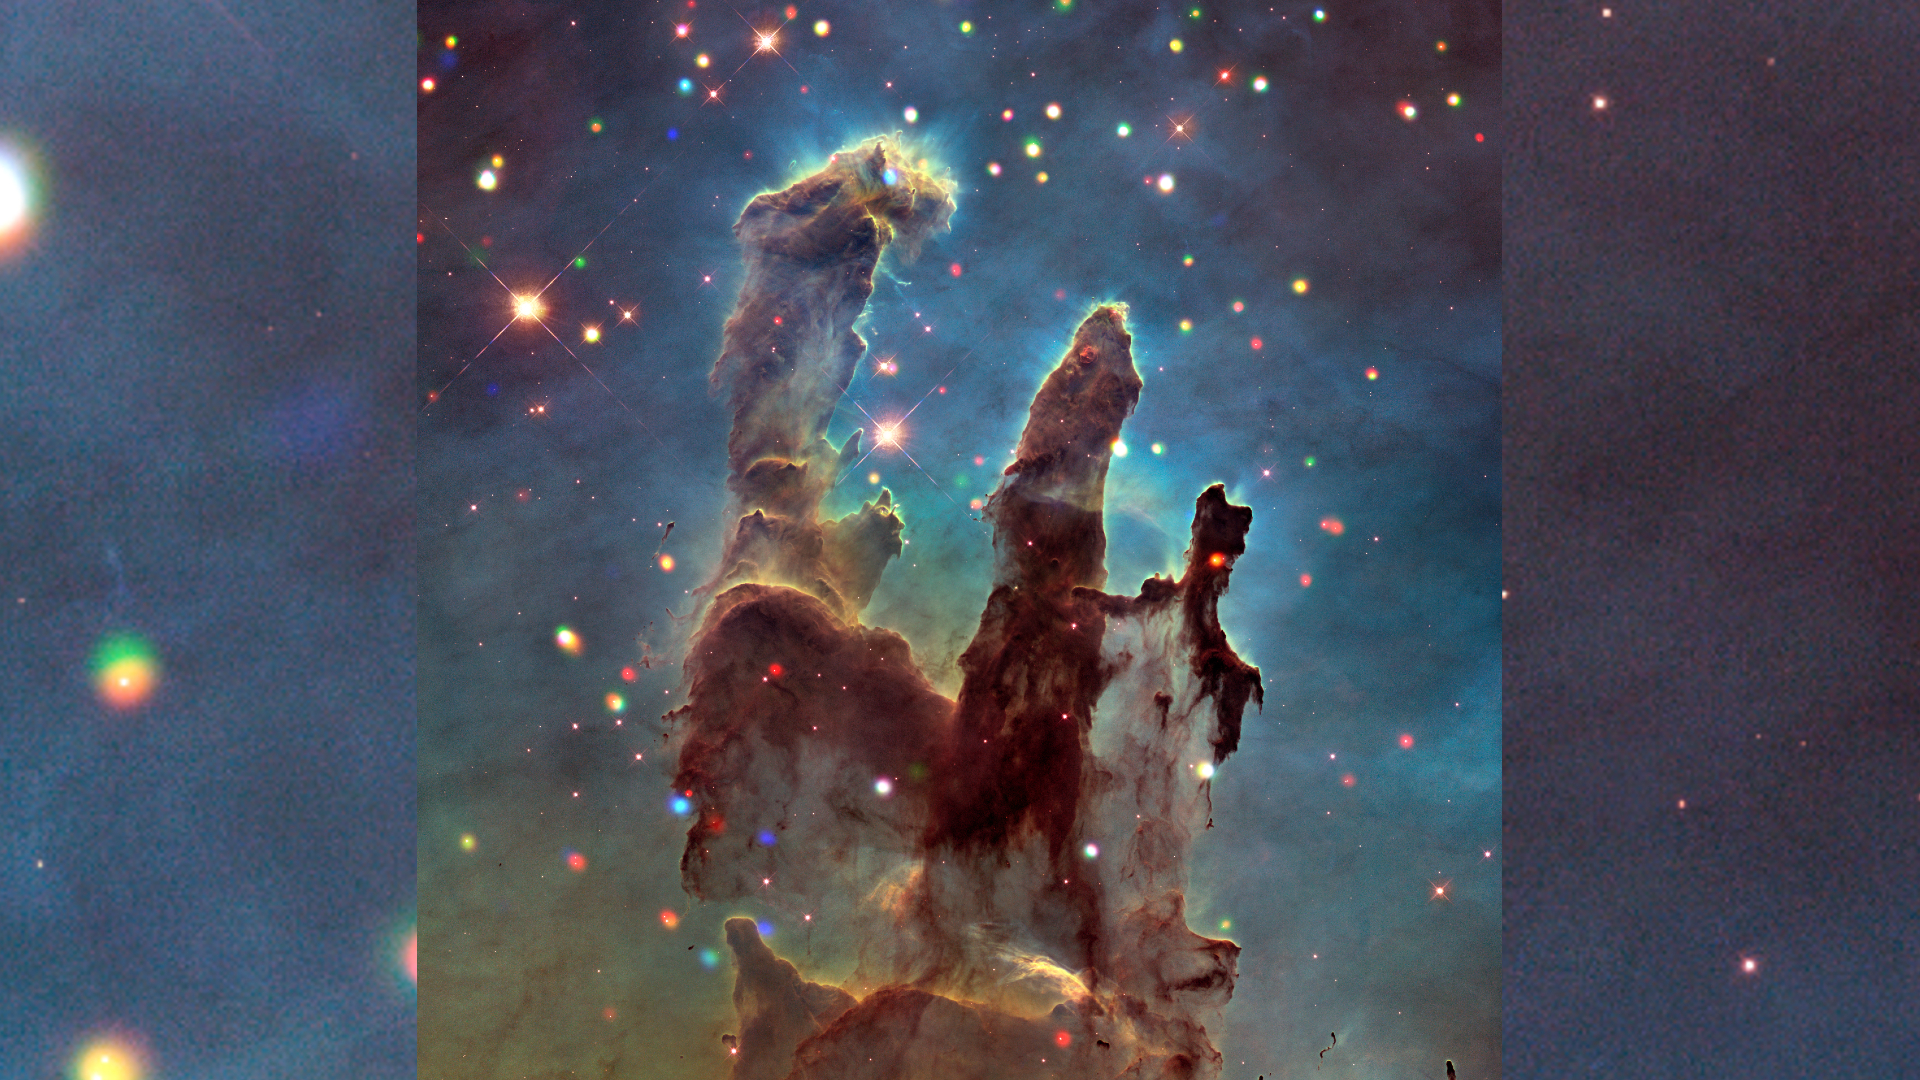 carina nebula x ray